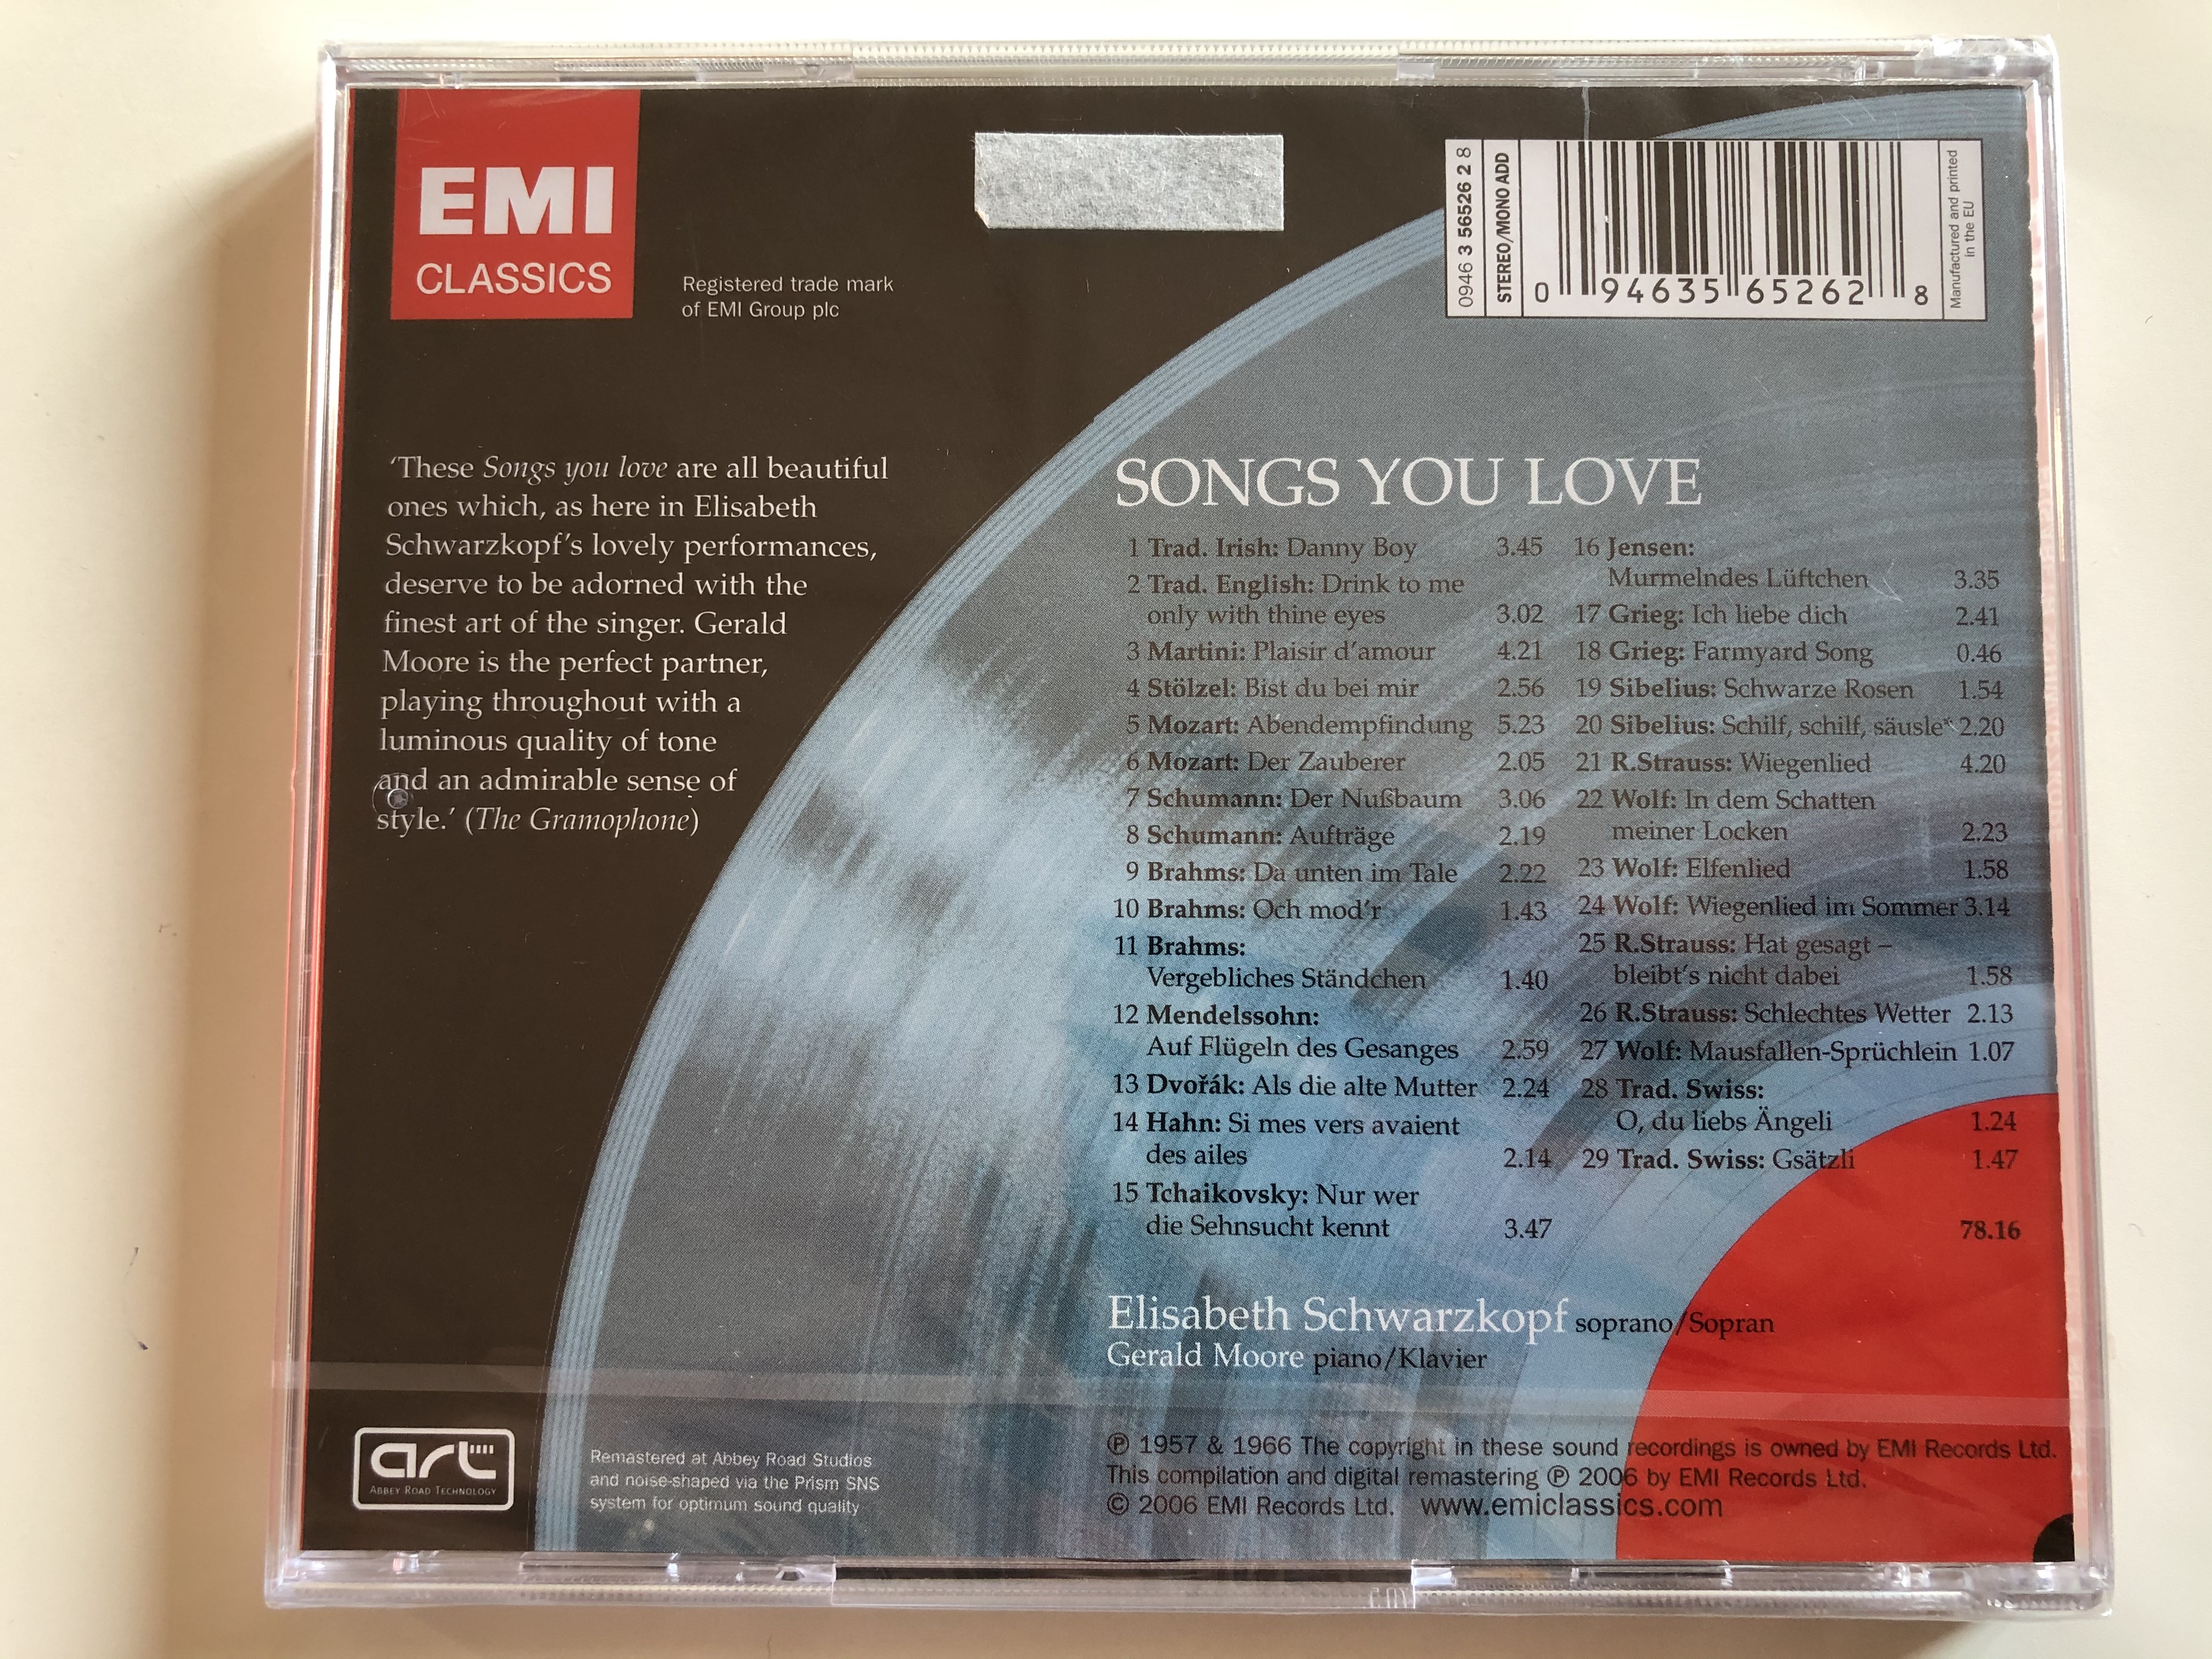 elisabeth-schwarzkopf-songs-you-love-gerald-moore-great-artists-of-the-century-emi-classics-audio-cd-2006-stereo-mono-094635652628-2-.jpg